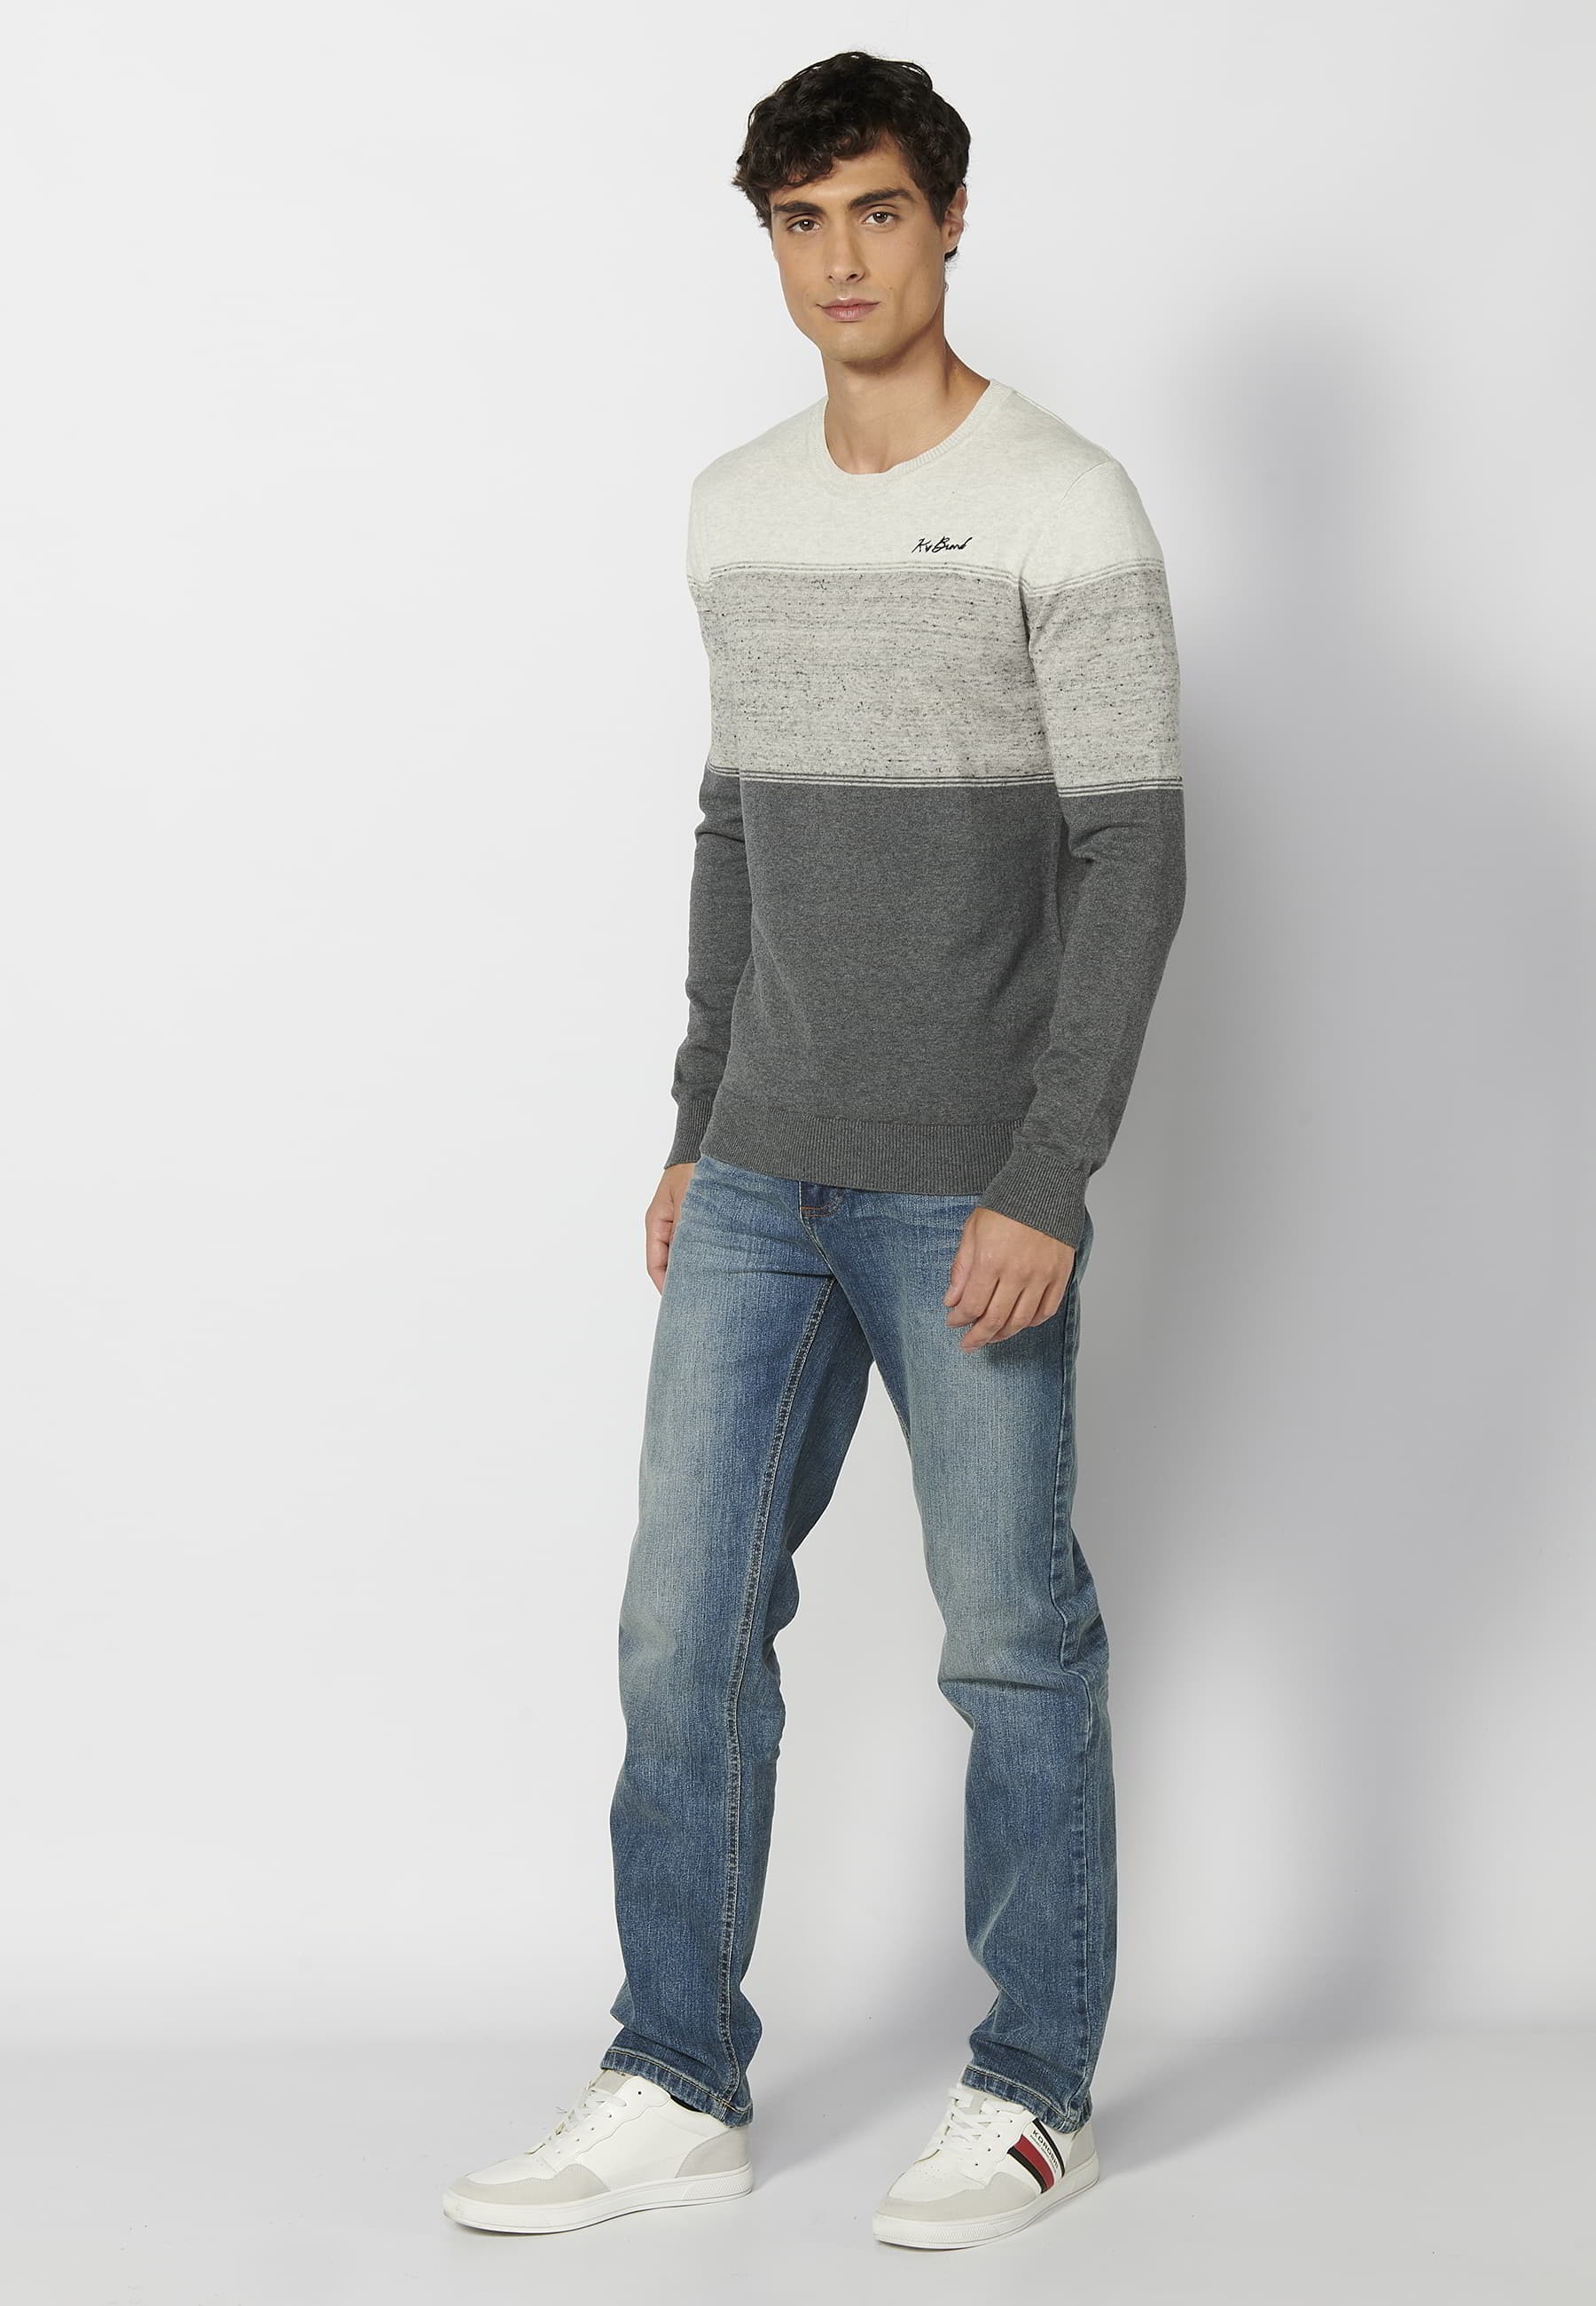 Jersey de punto de algodón manga larga cuello redondo color gris para hombre 2